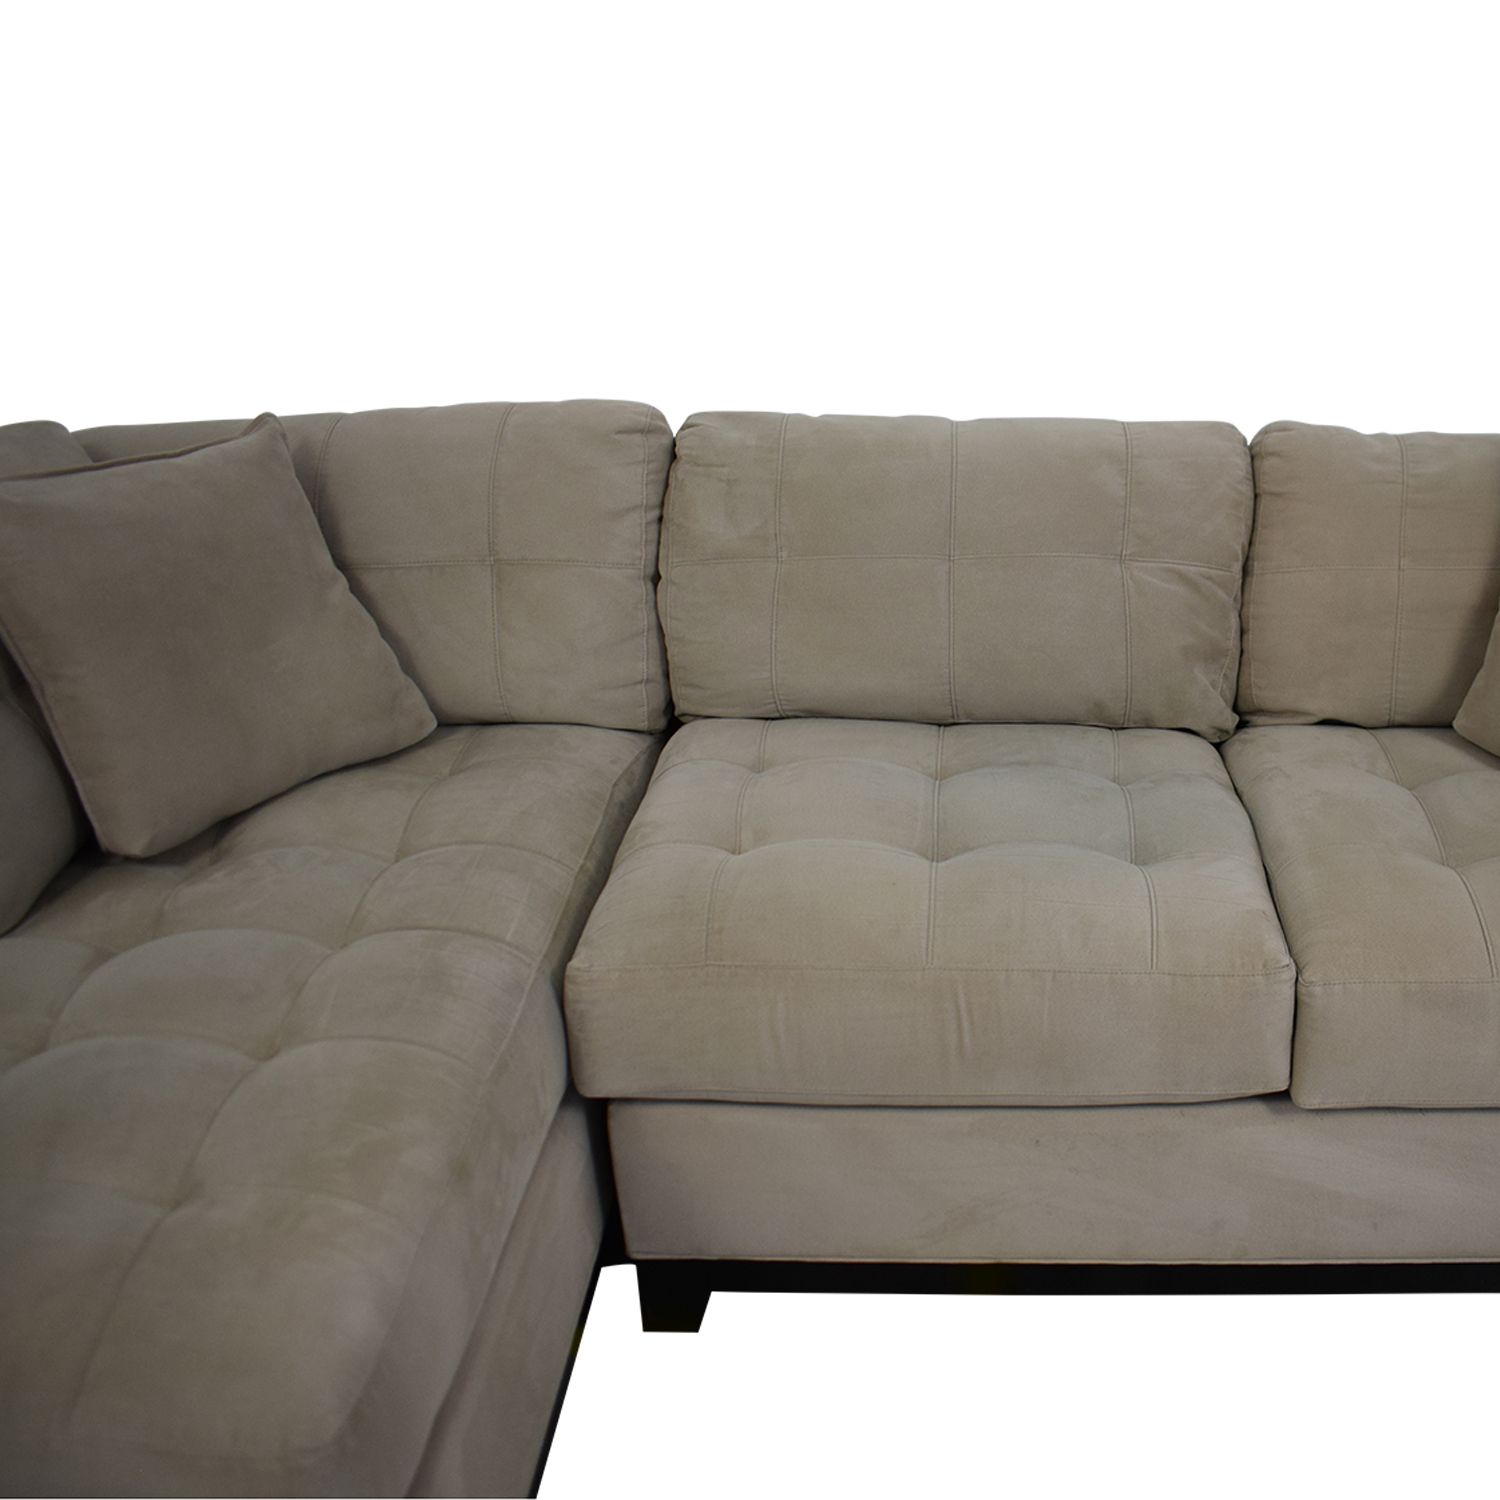 Cindy Crawford Home Metropolis Microfiber Sectional Sofa | Baci Living Room Pertaining To Microfiber Sectional Corner Sofas (Gallery 10 of 20)